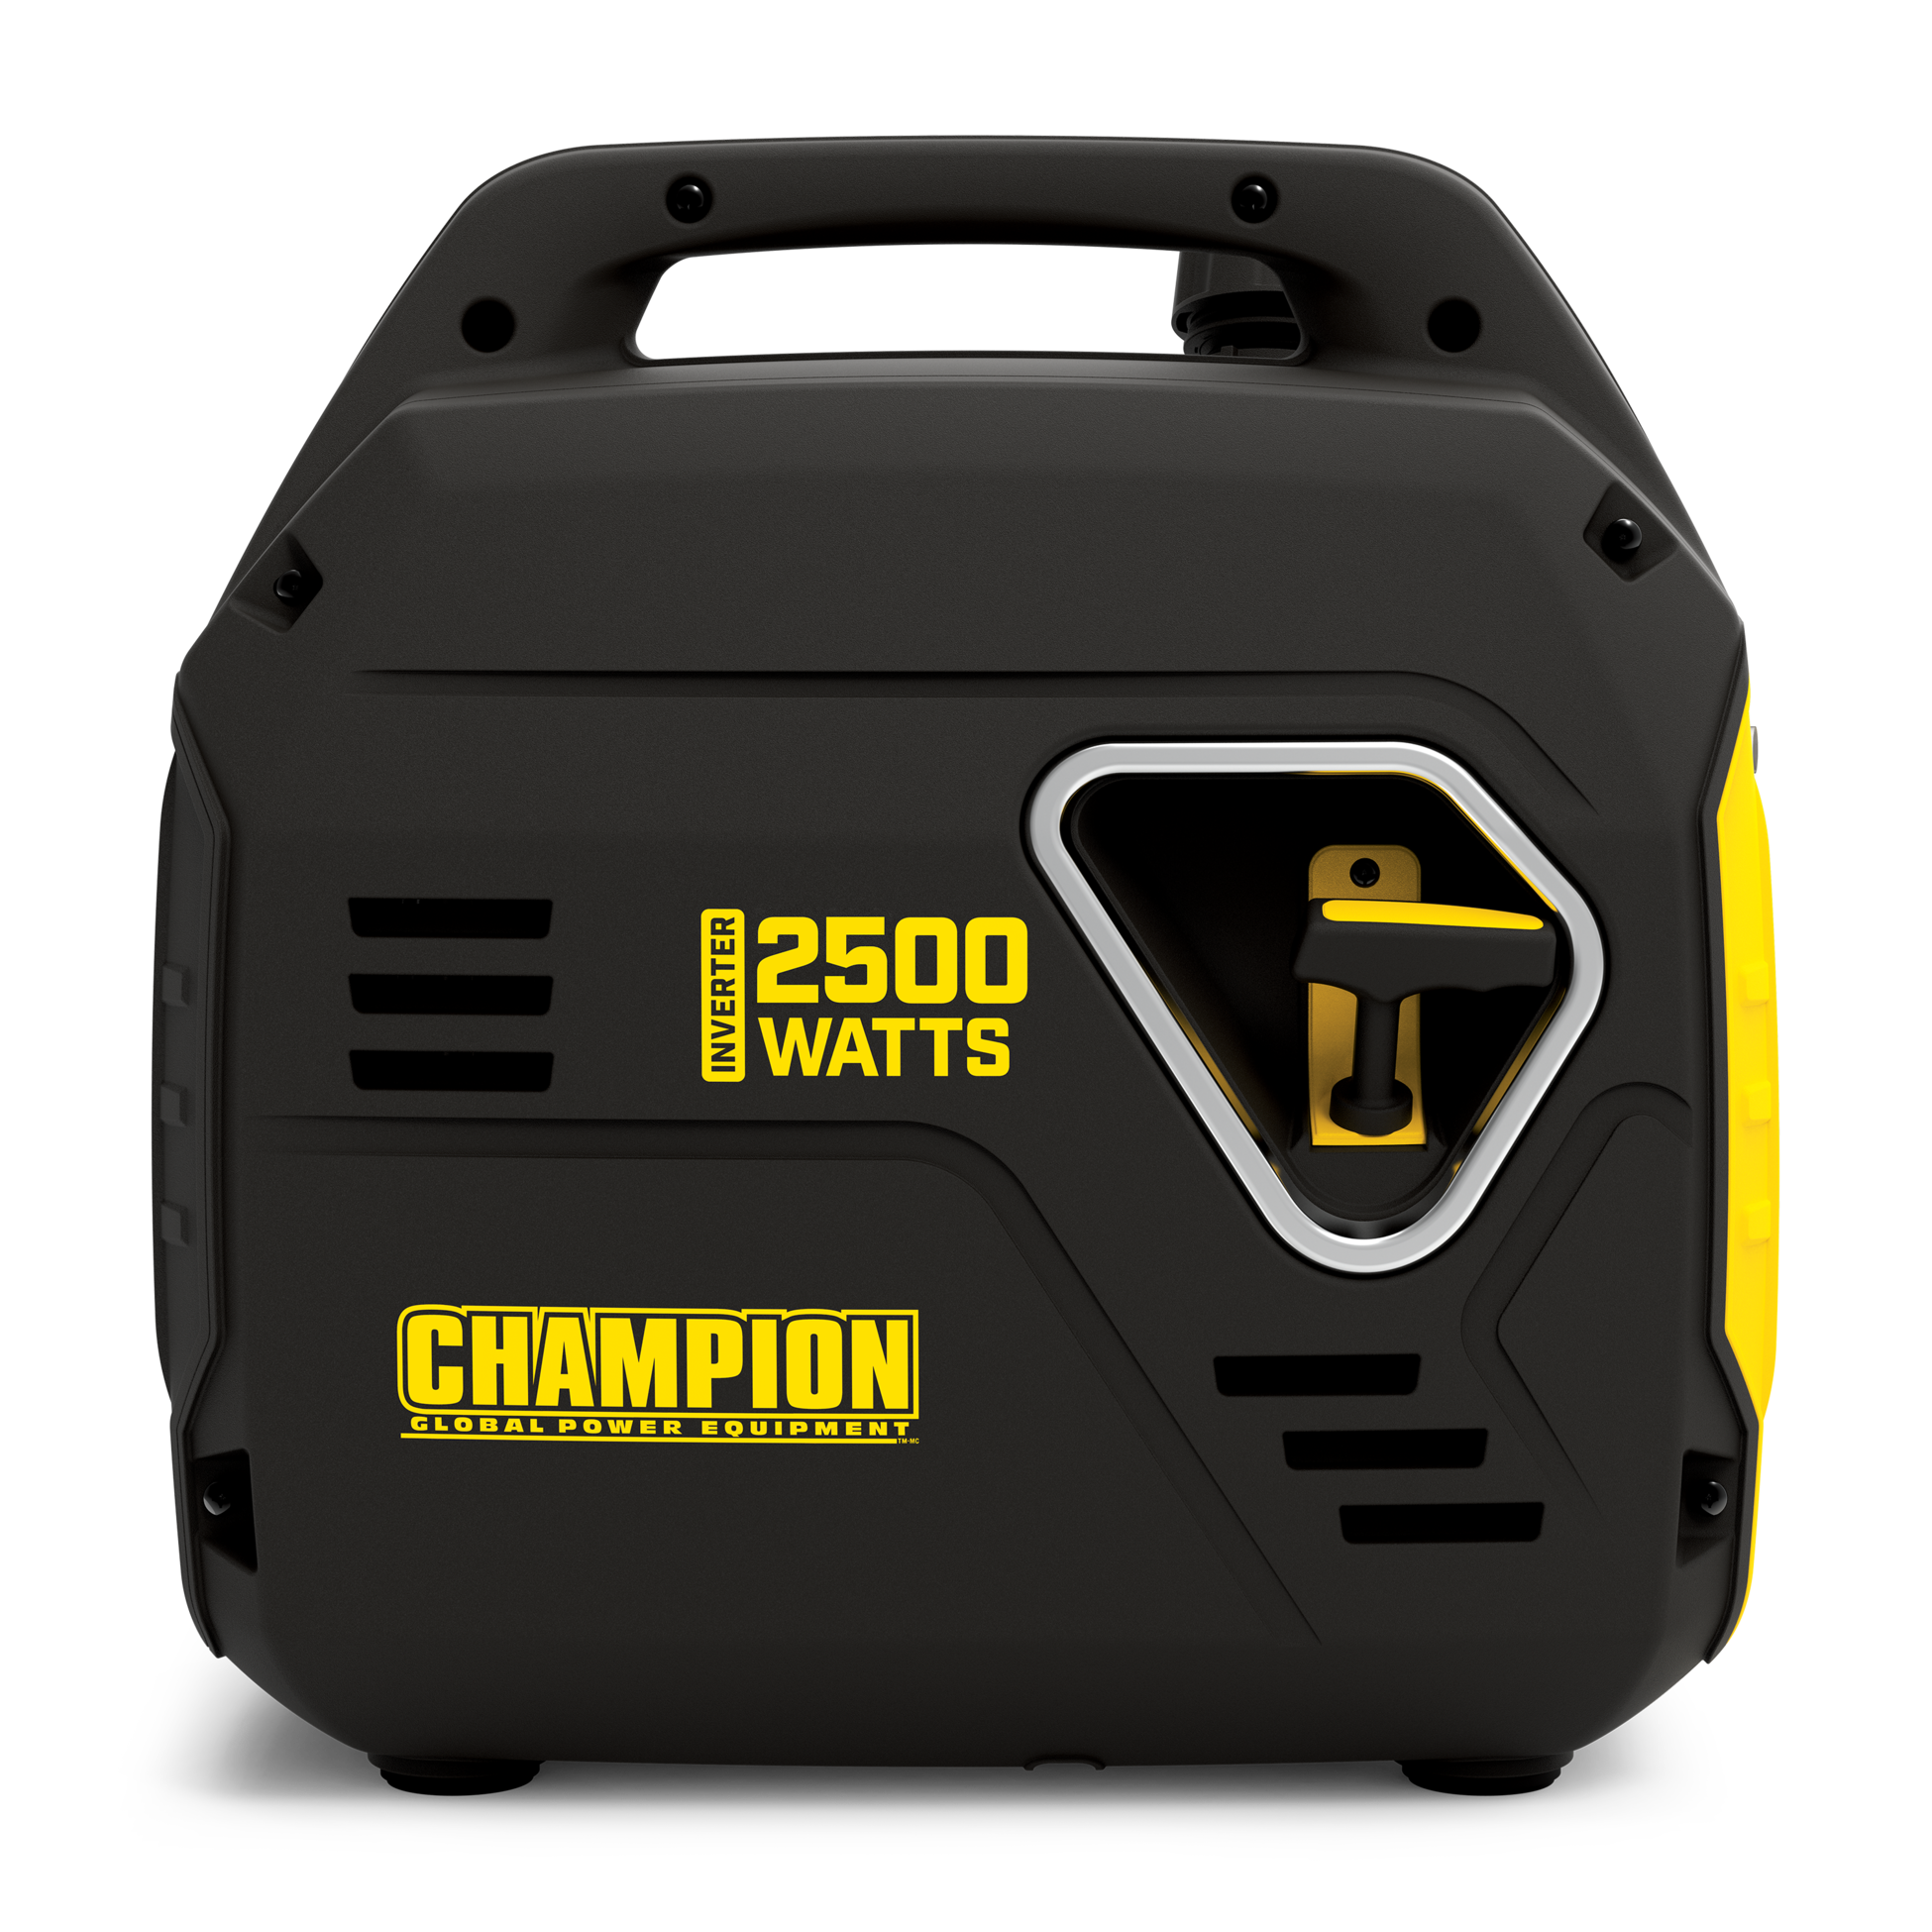 Champion 200950 1850W/2500W Gas Portable Inverter Generator New